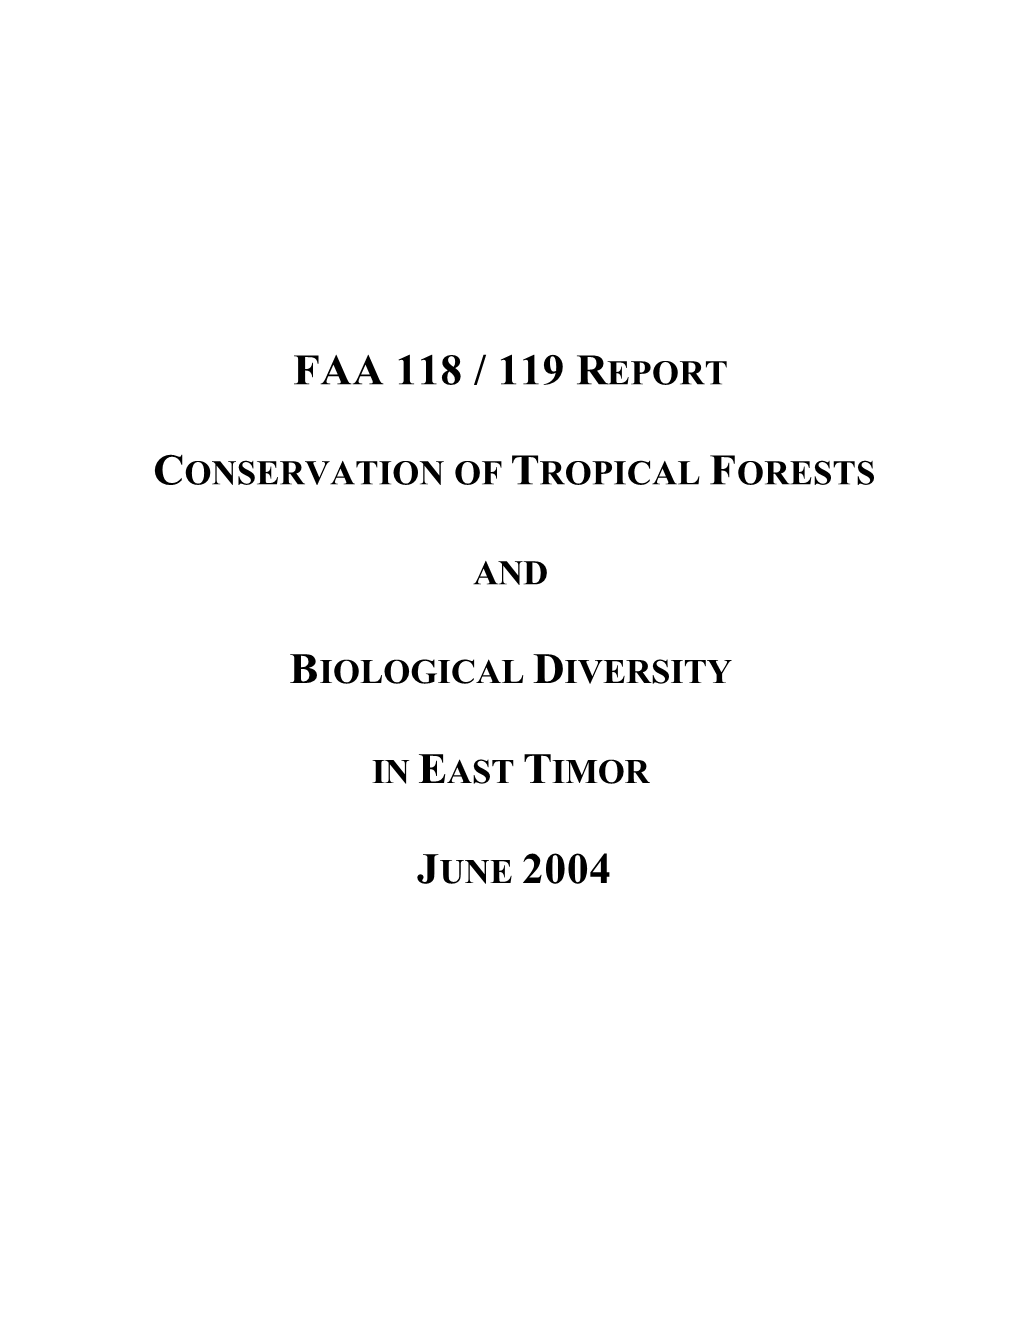 Faa 118 / 119 Report June 2004